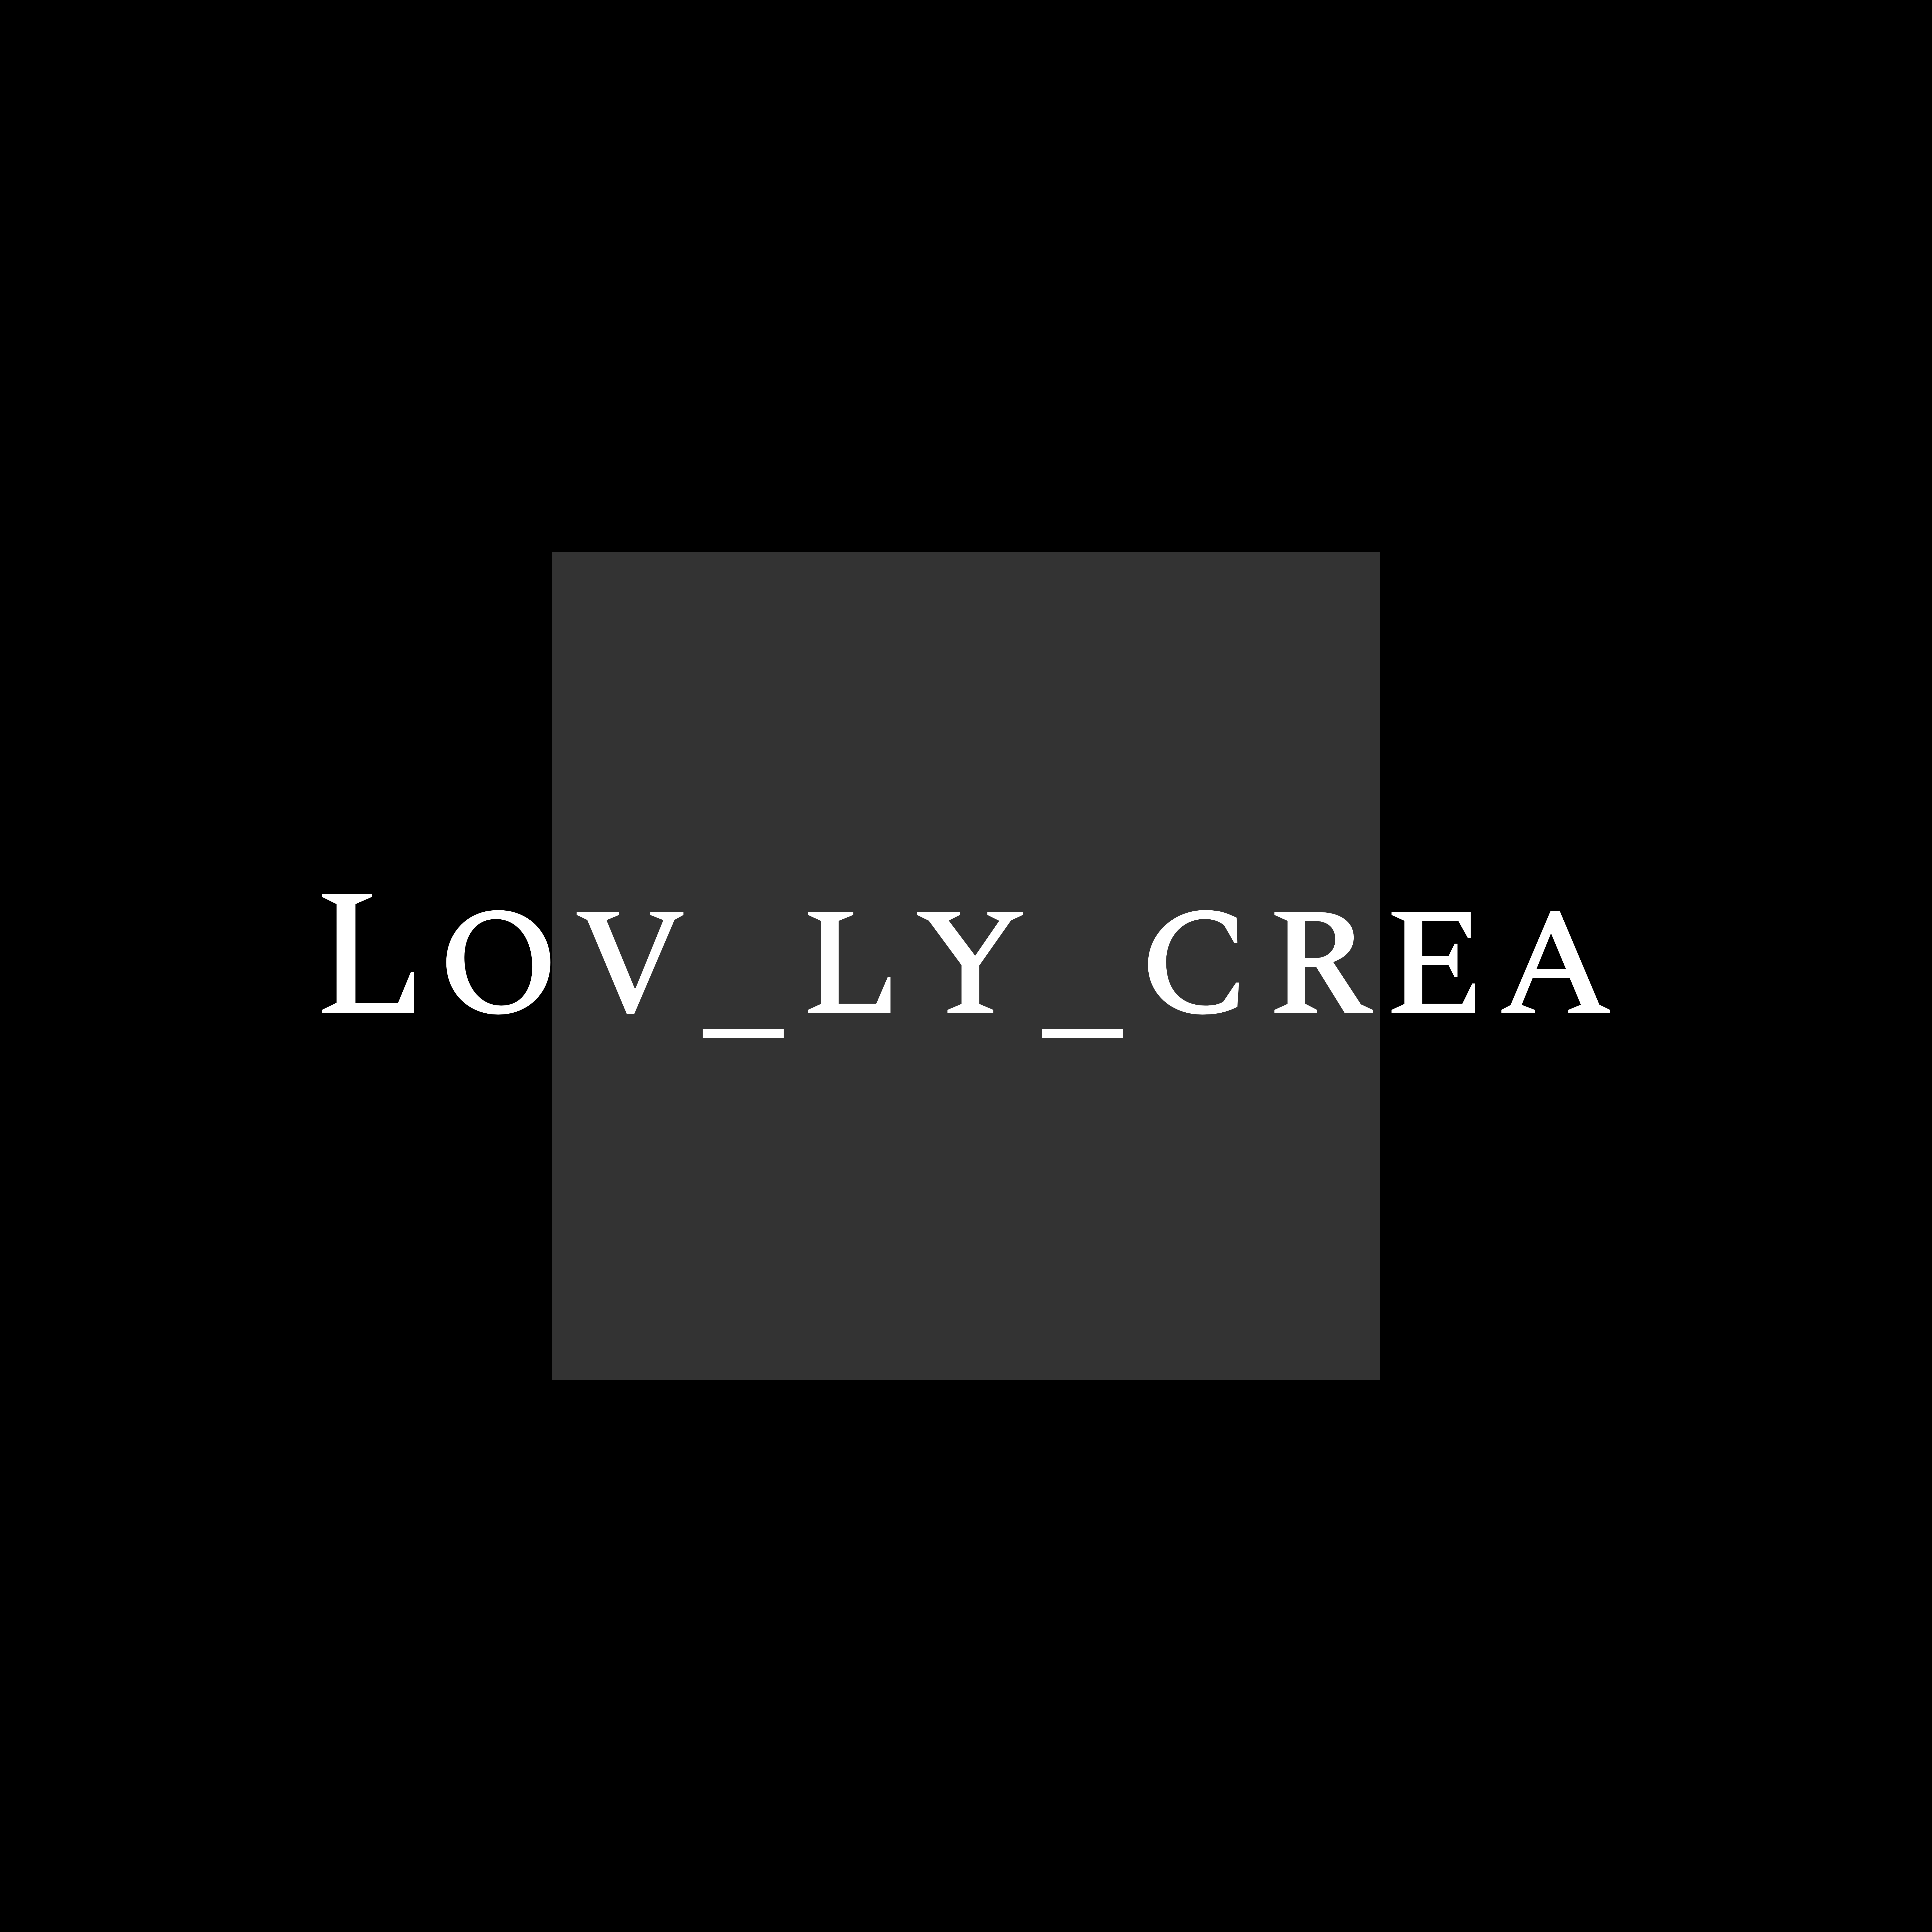 Lov_ly_crea